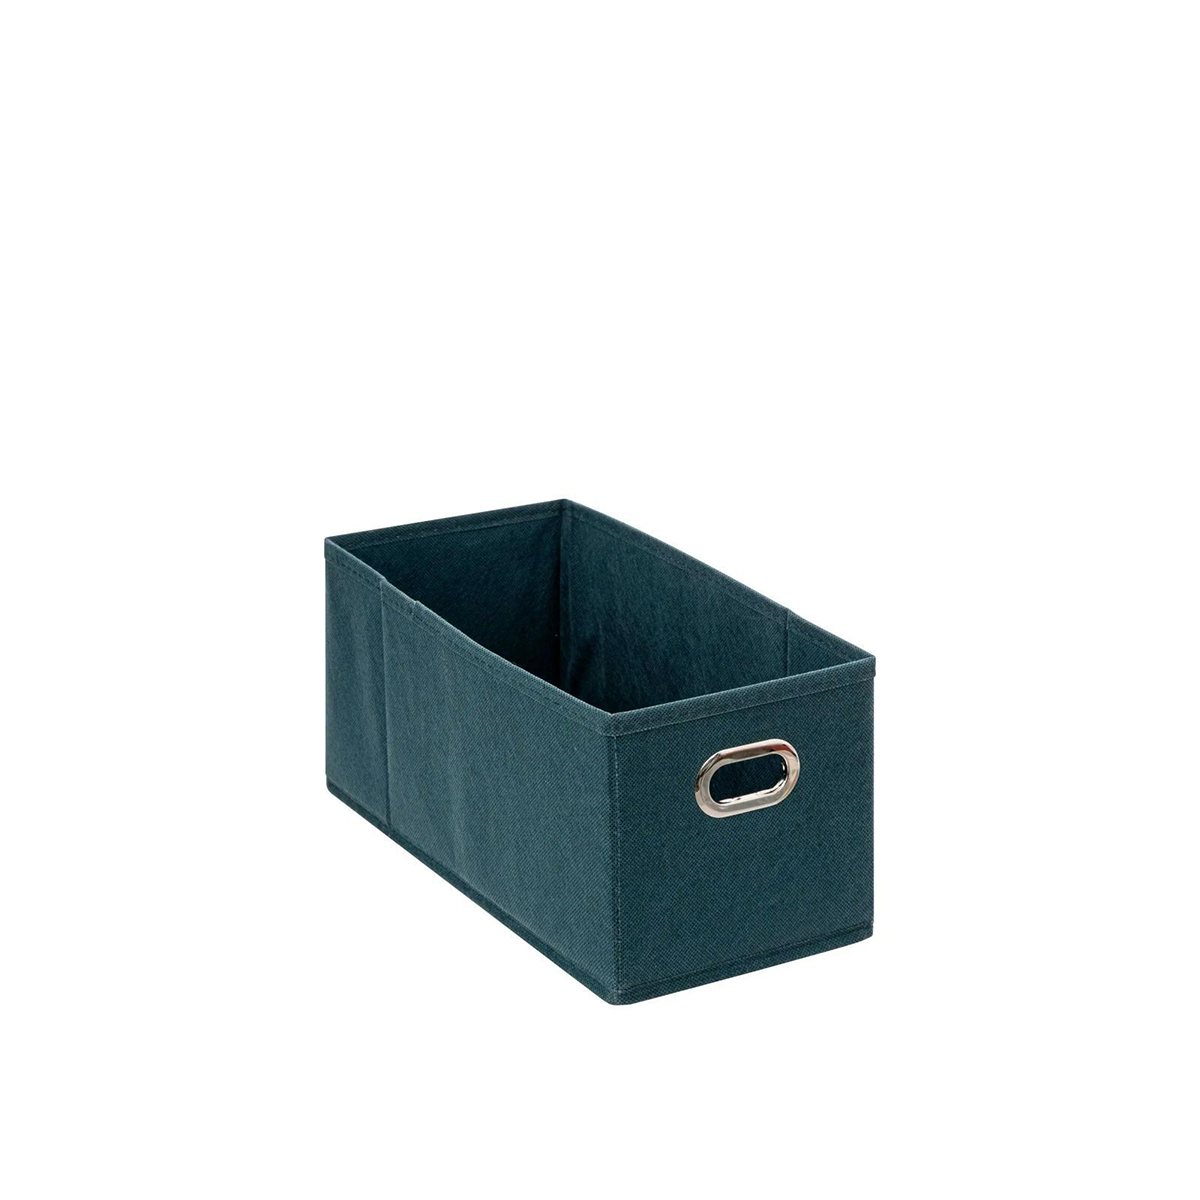 5 Five Simply Smart Storage Box 31×15 CM -  – Online